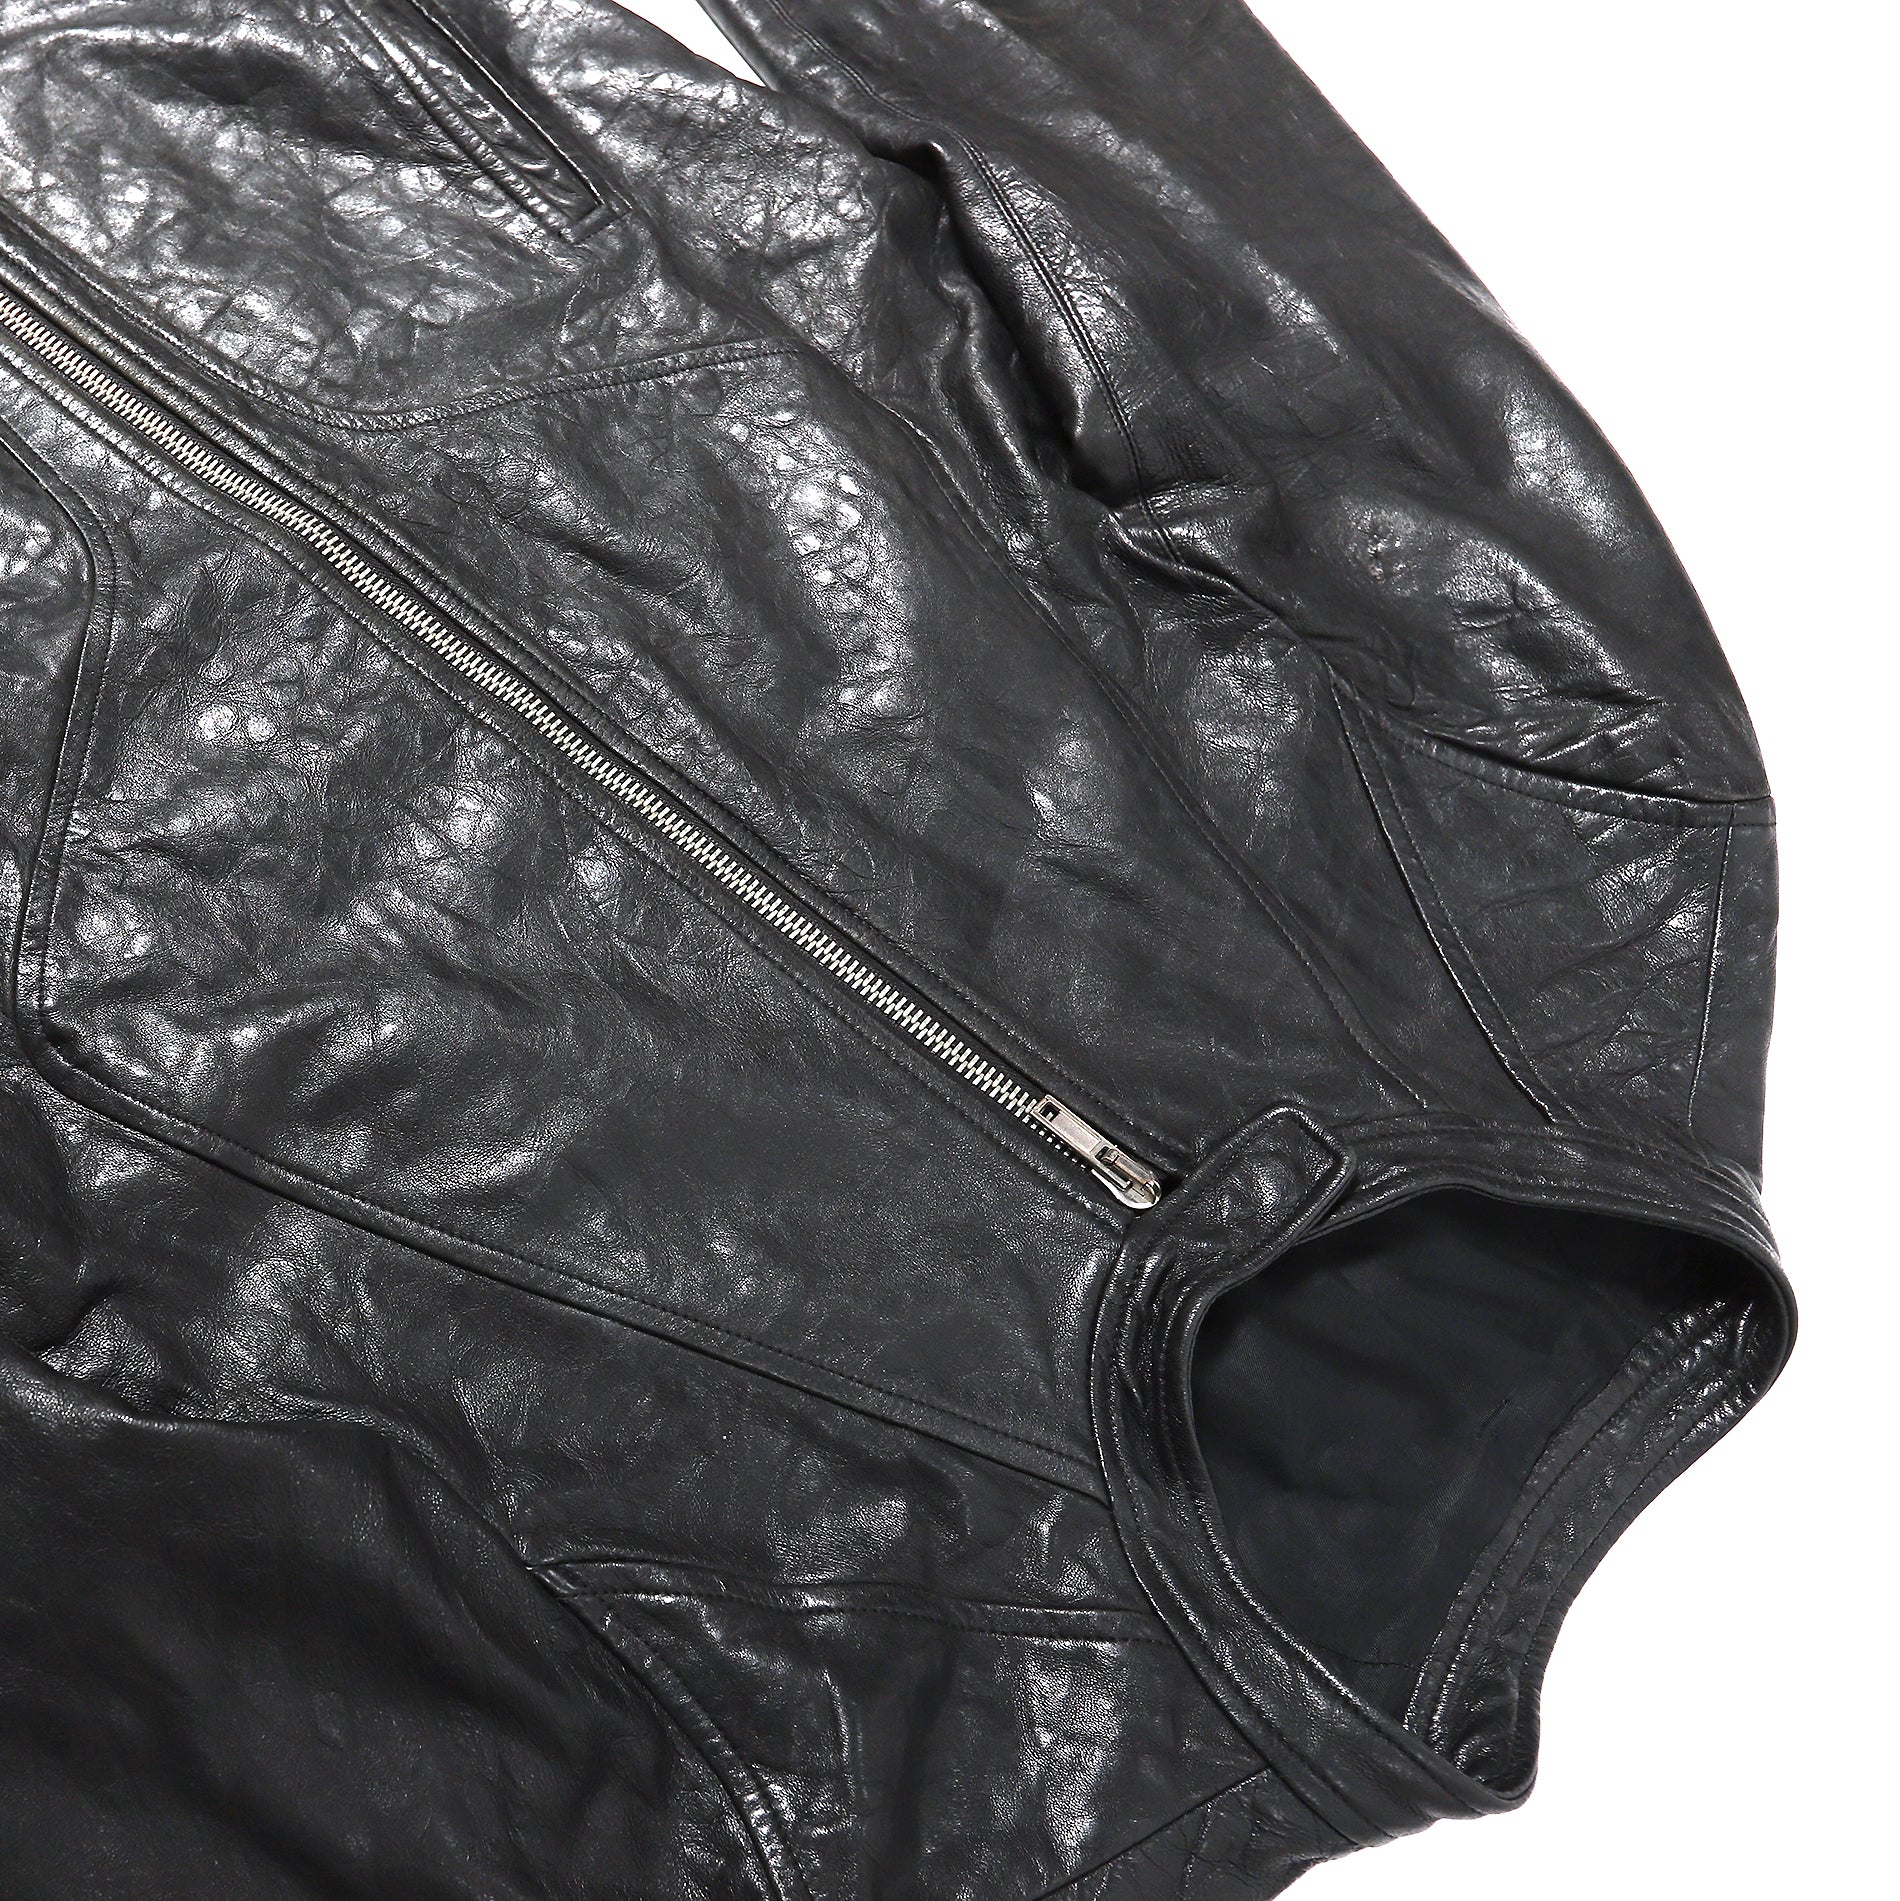 Rick Owens SS10 Hammered Lamb Intarsia Leather Jacket